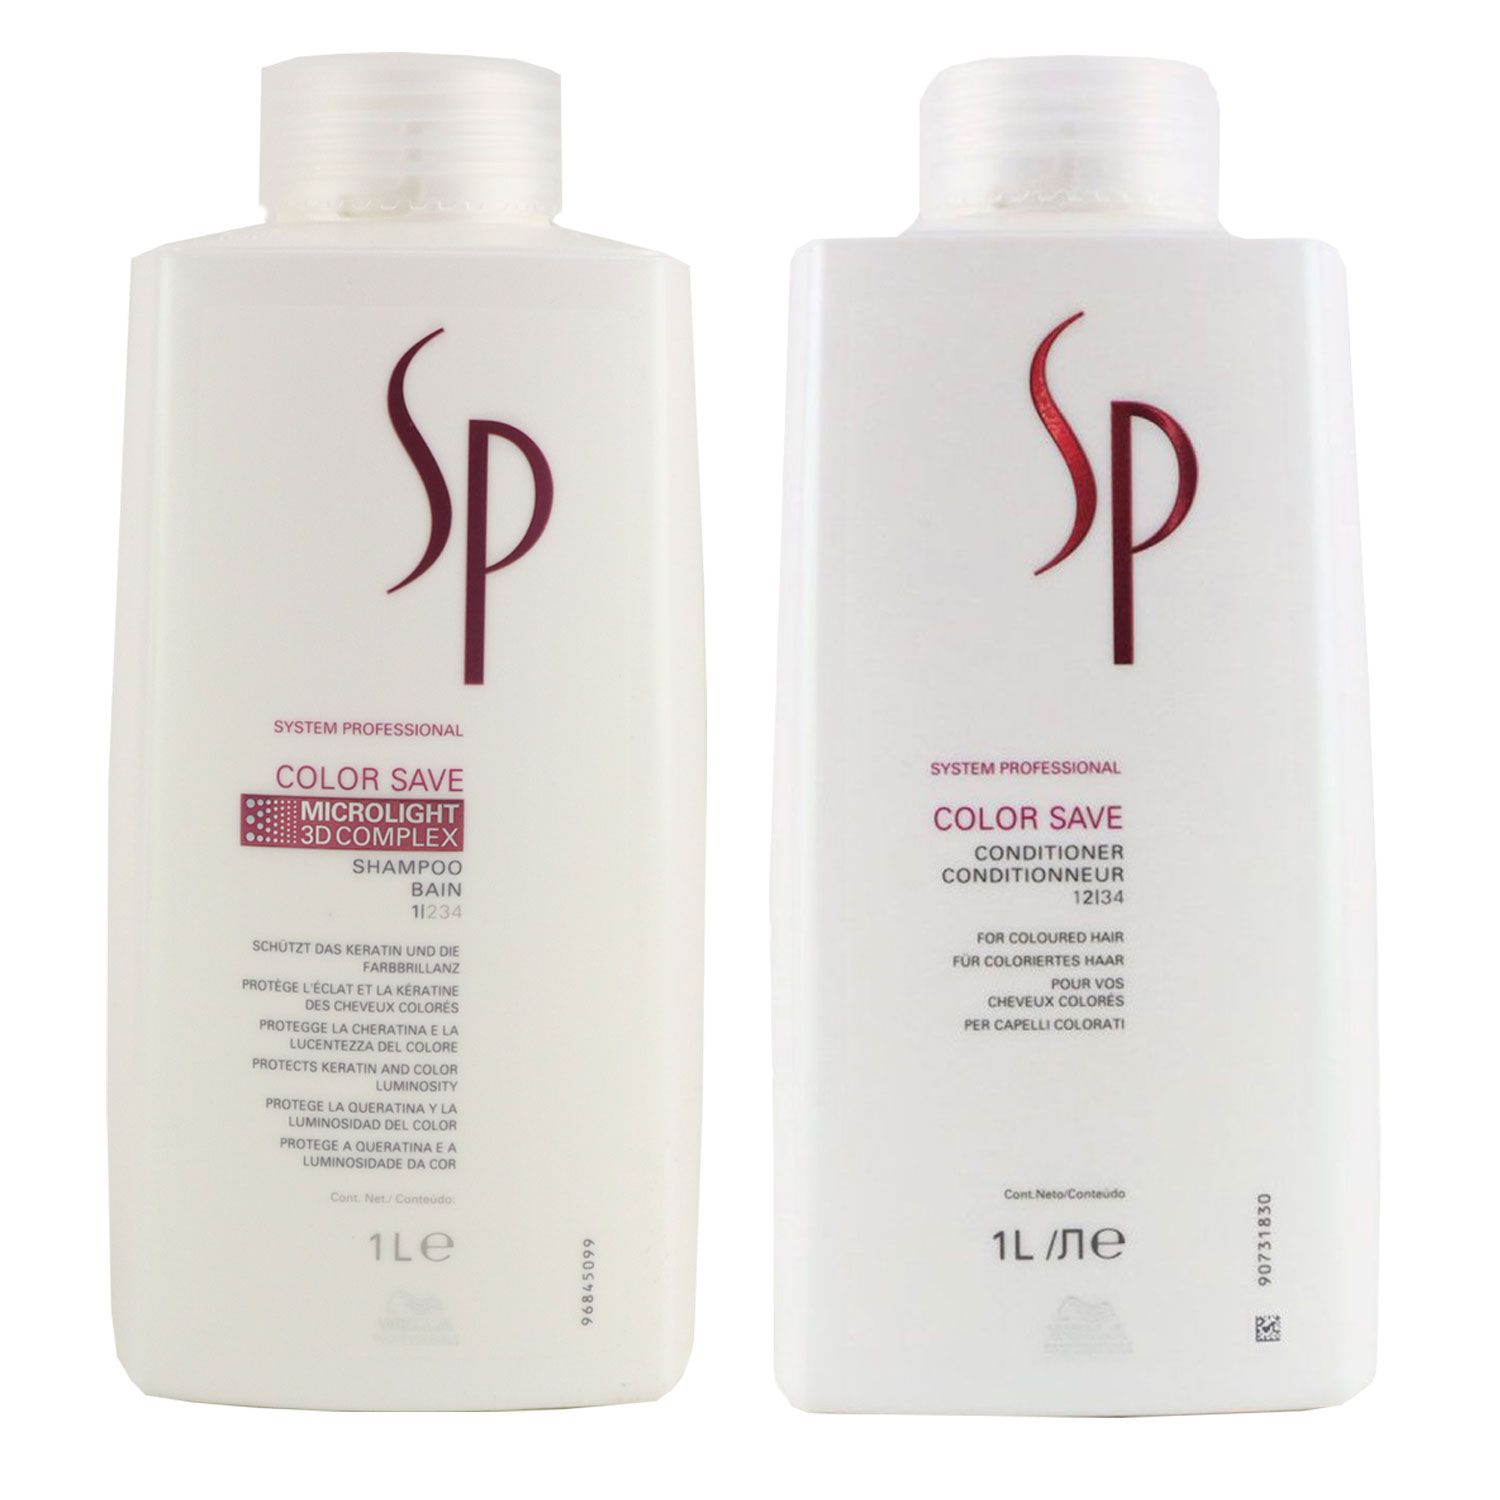 Wella professionals шампунь SP Color save, 1000 мл. Wella SP Silver blond Shampoo 250 мл. REISTILL шампунь Color save. Wella SP Color save Musk.